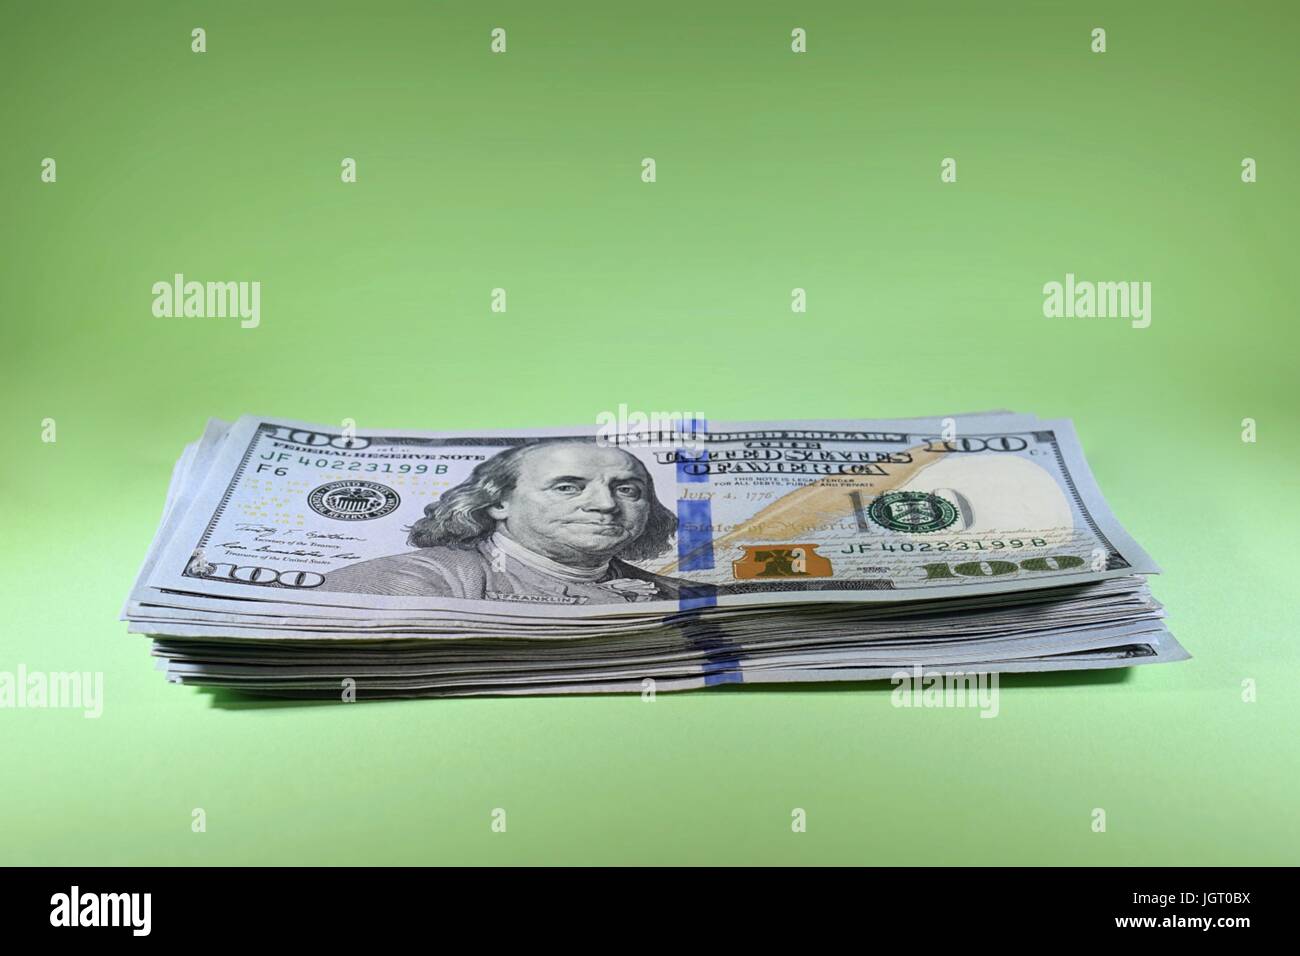 single stack of new hundred dollar bills American $100 USD cash money on green background Stock Photo